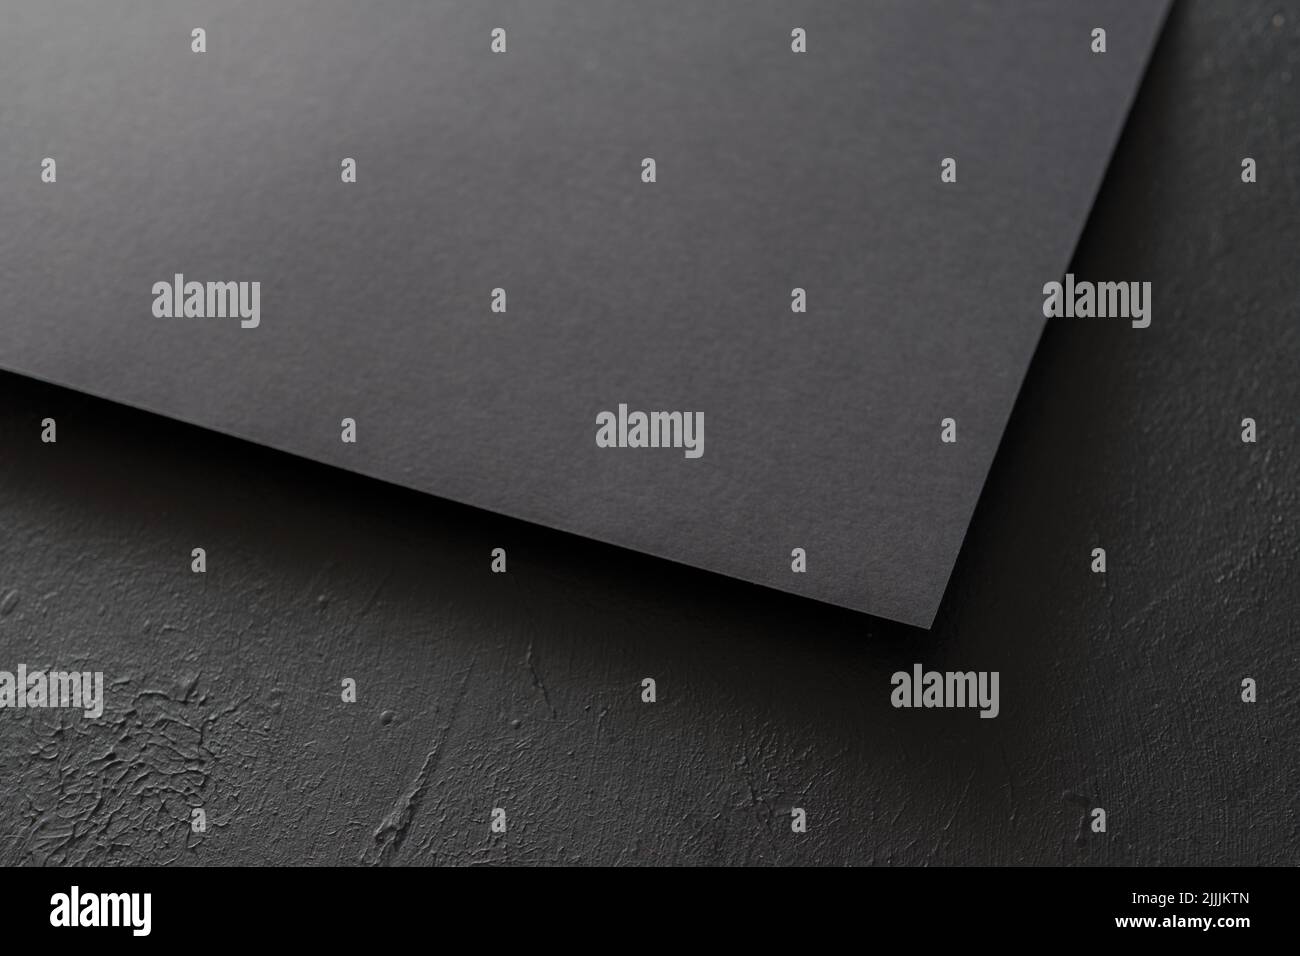 white construction paper texture Stock Photo - Alamy